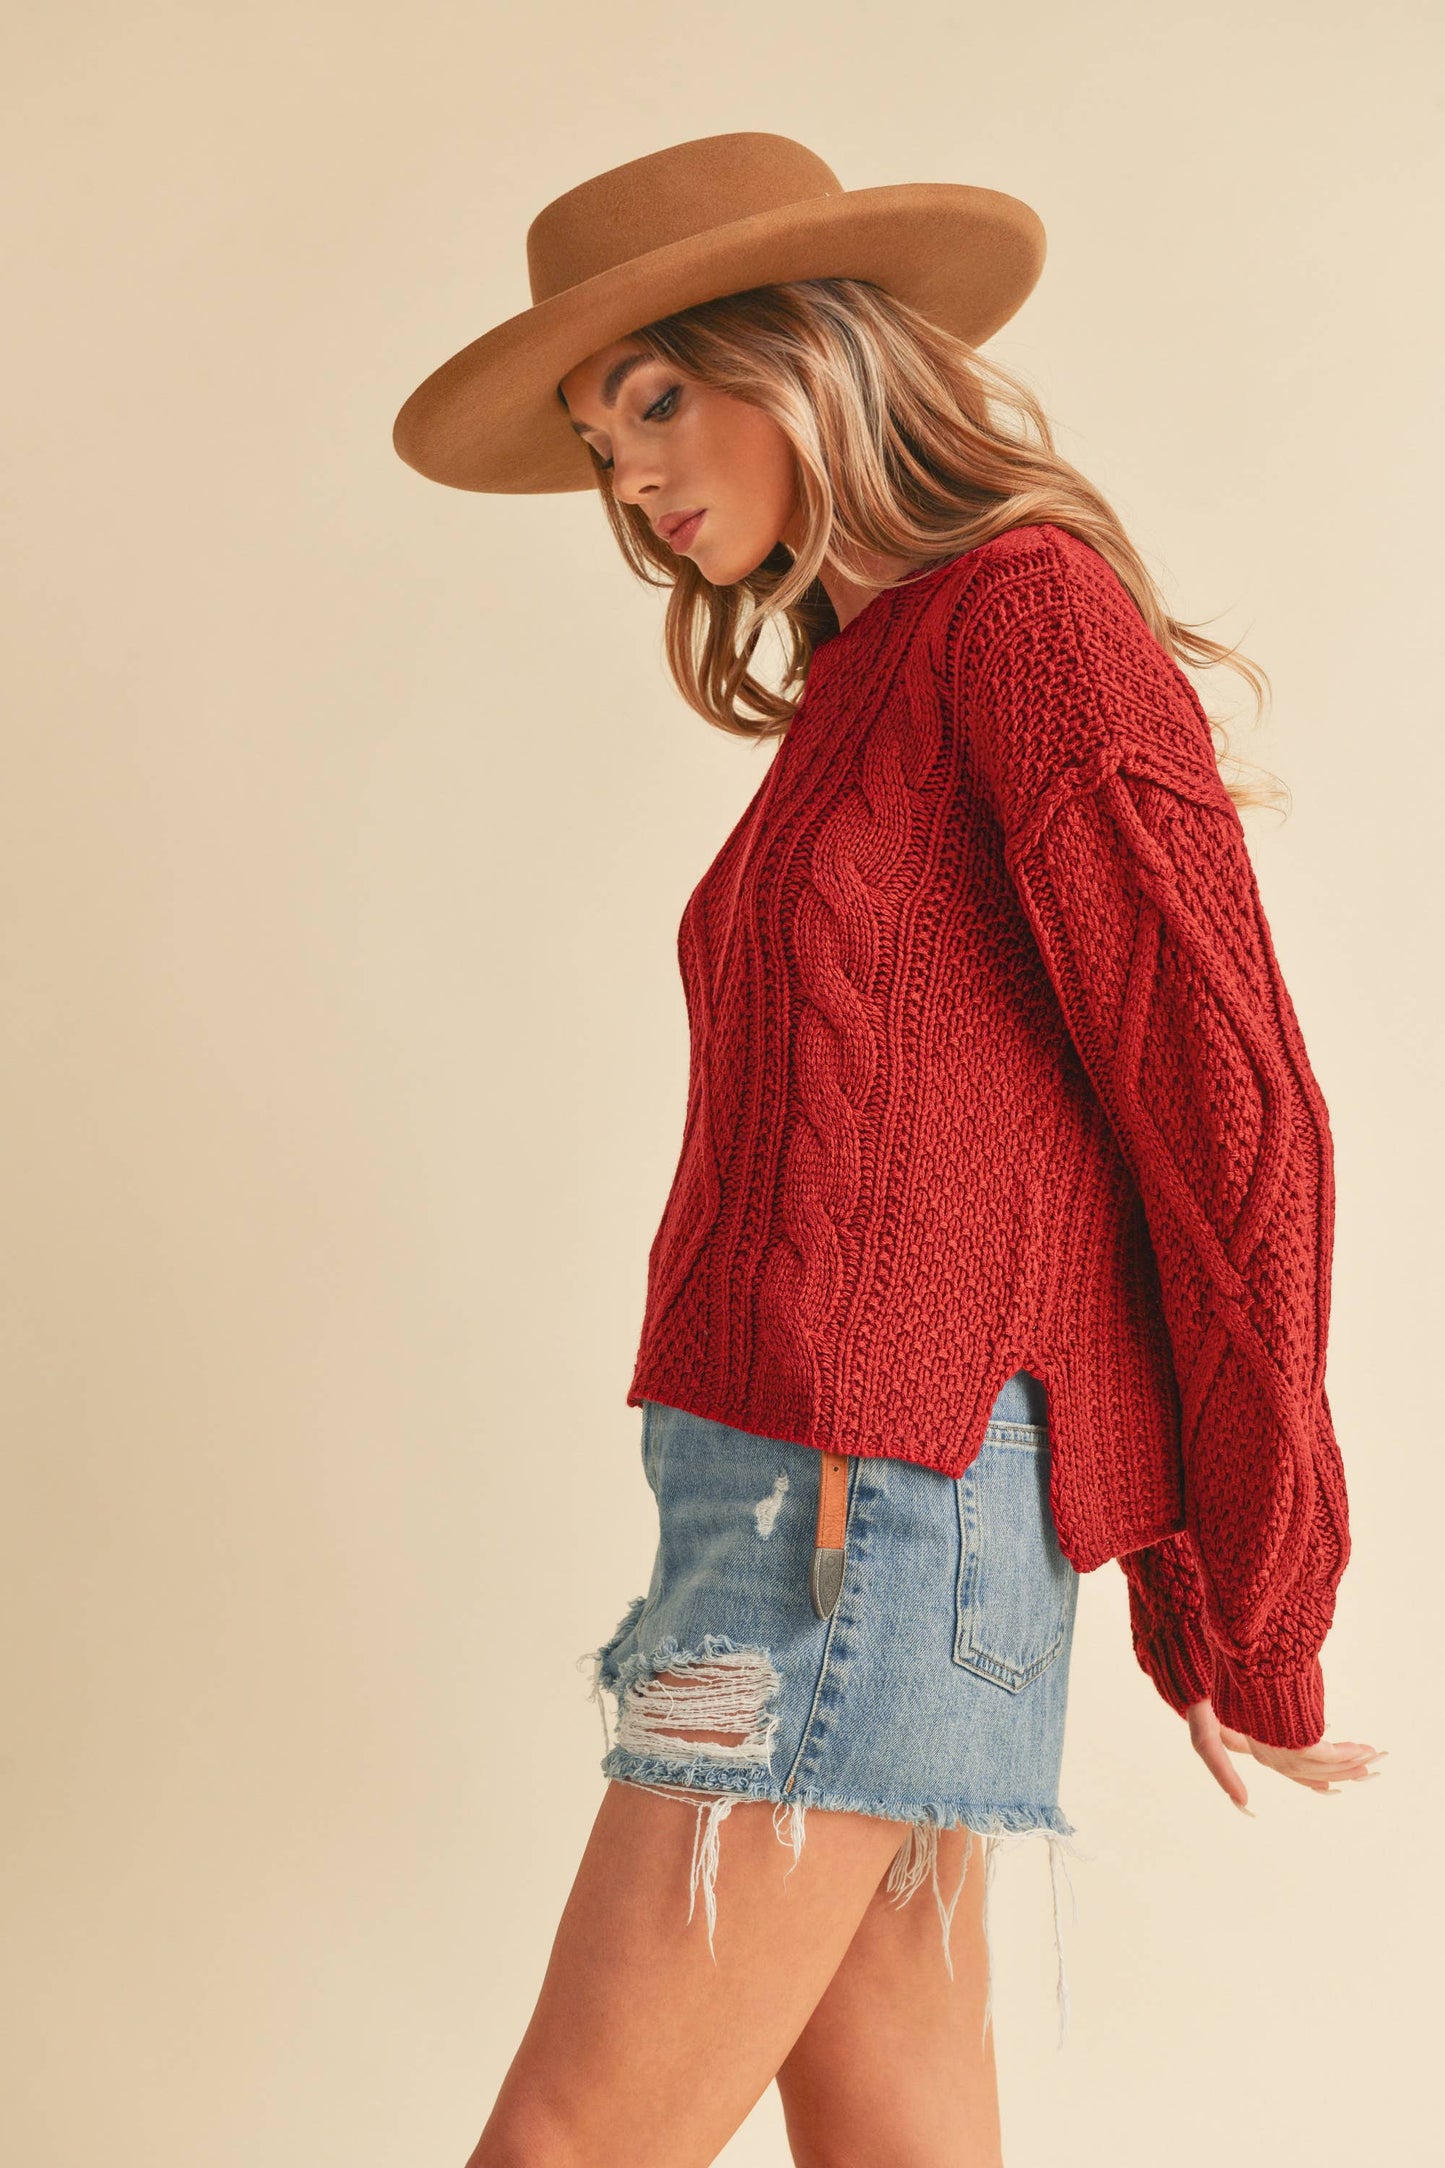 397CK Adela Sweater: S / Knit / Heather Gray